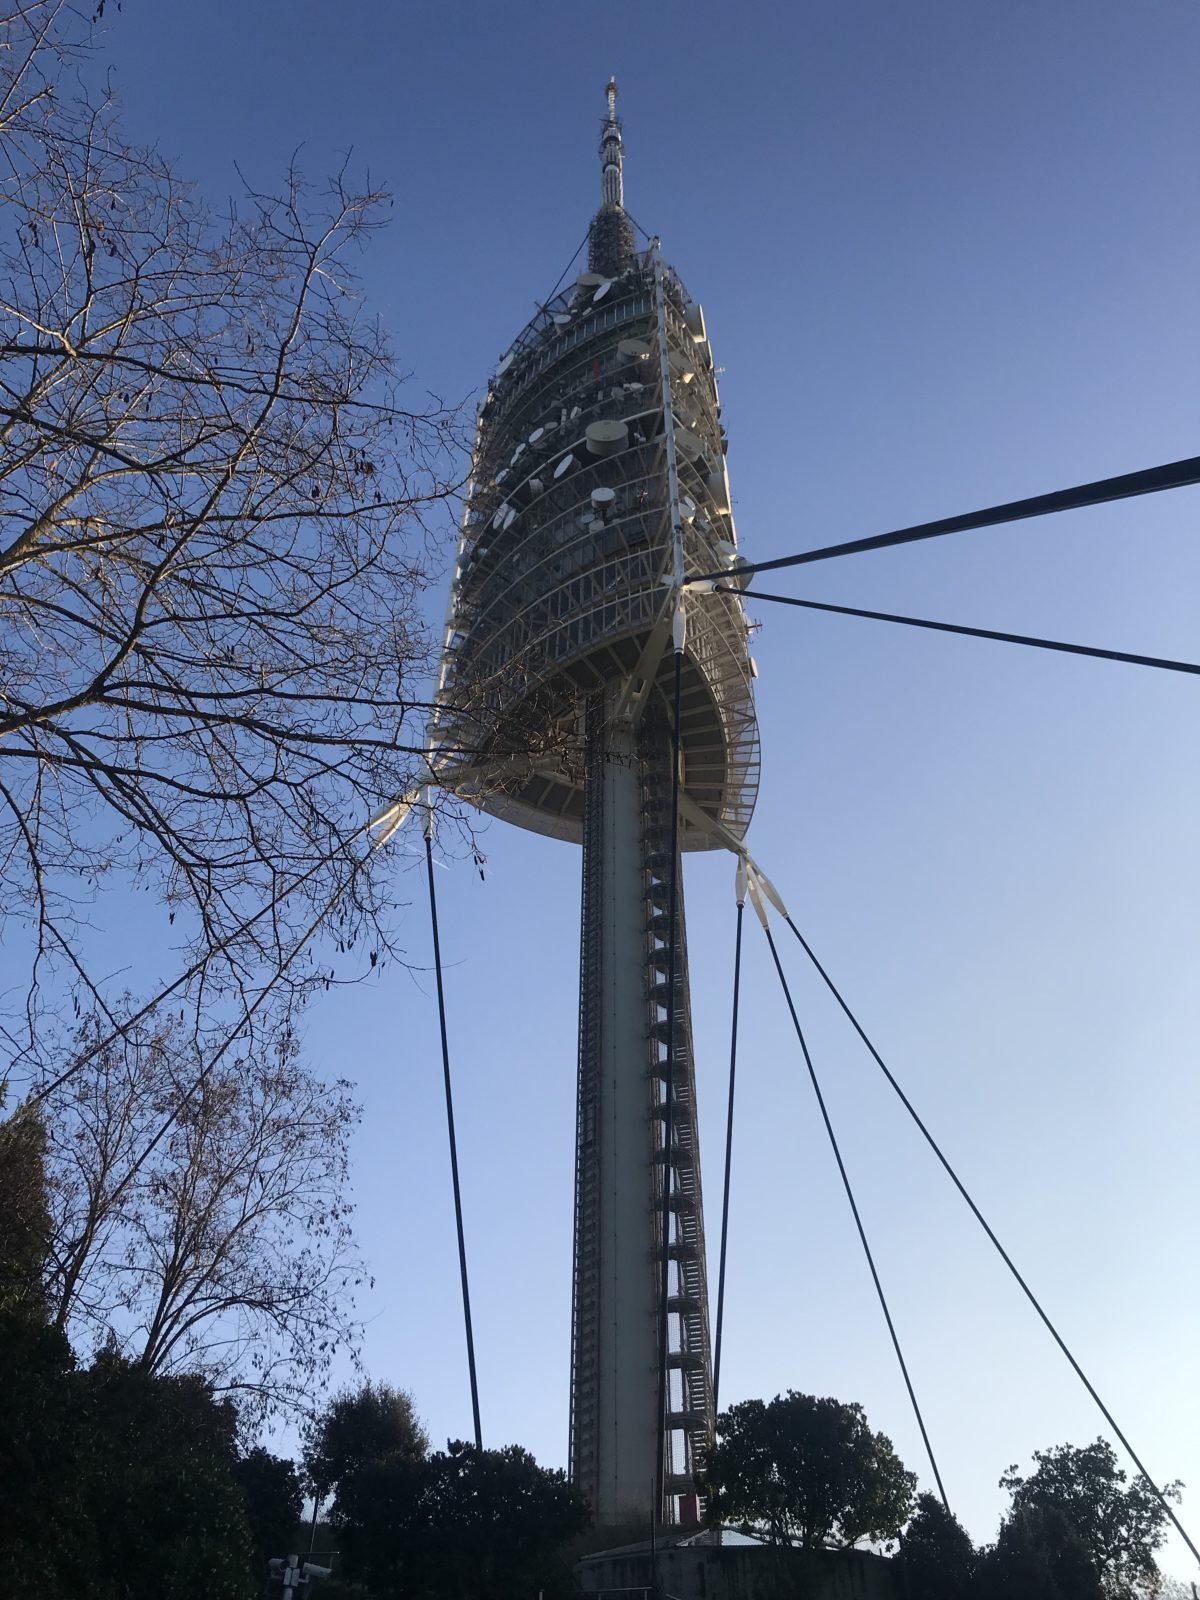 Torre de Collserola from below - a triangular structure suspended with steel wires